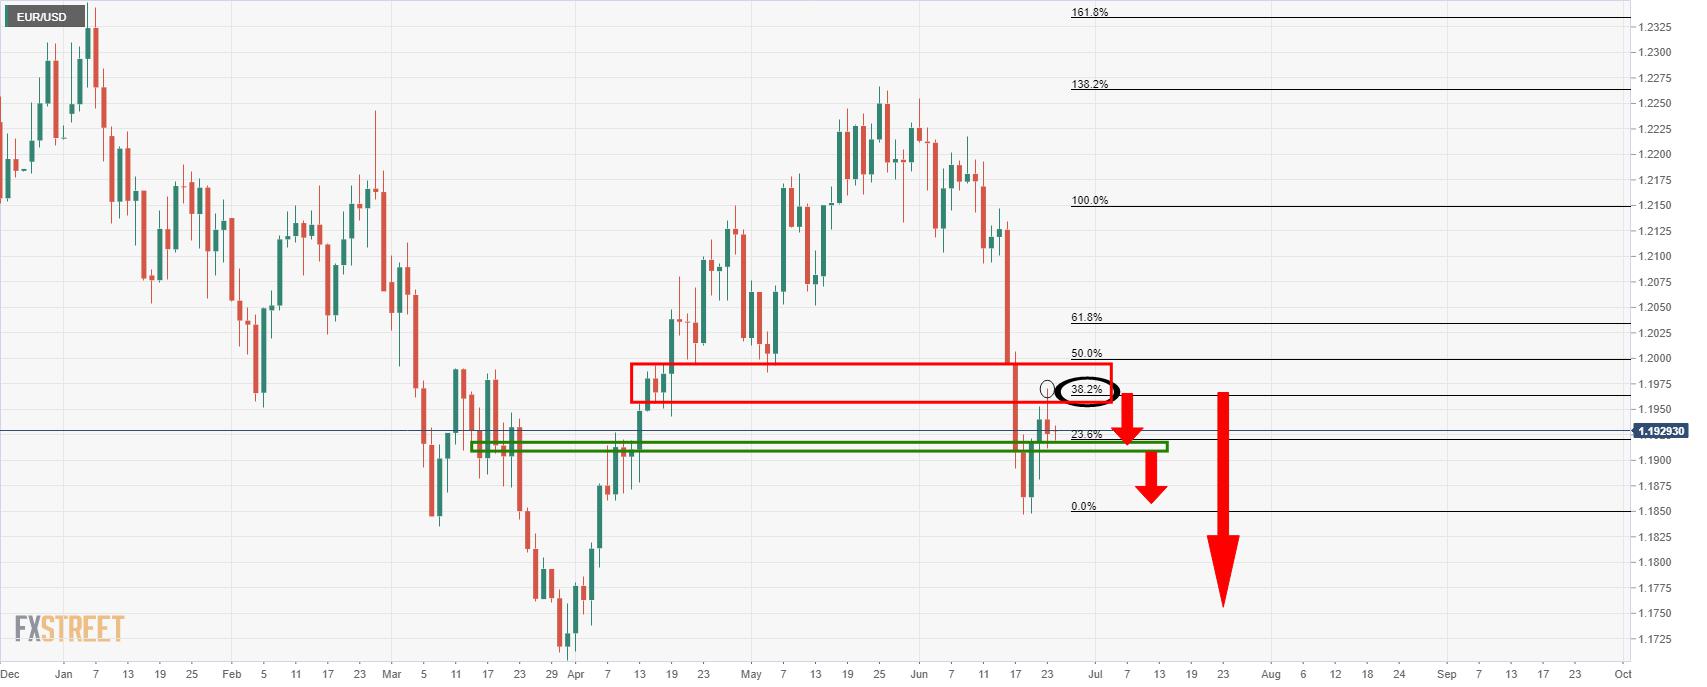 EUR/USD Price Analysis: Bears on the next leg towards 1.1805/12